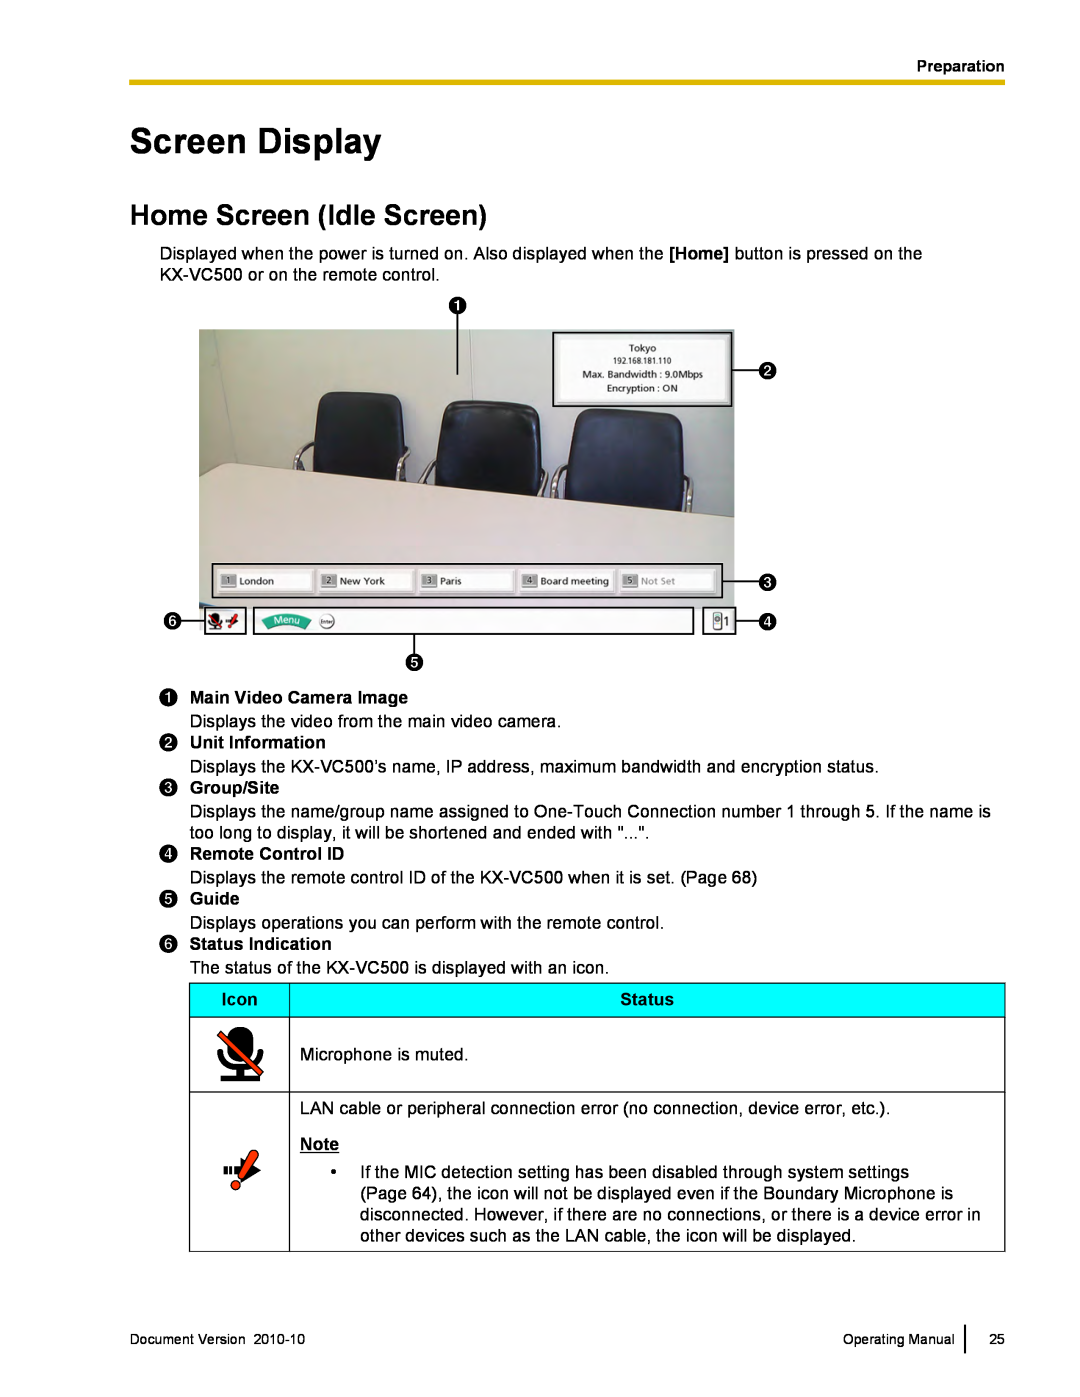 Panasonic KX-VC500 manual Screen Display, Home Screen Idle Screen 